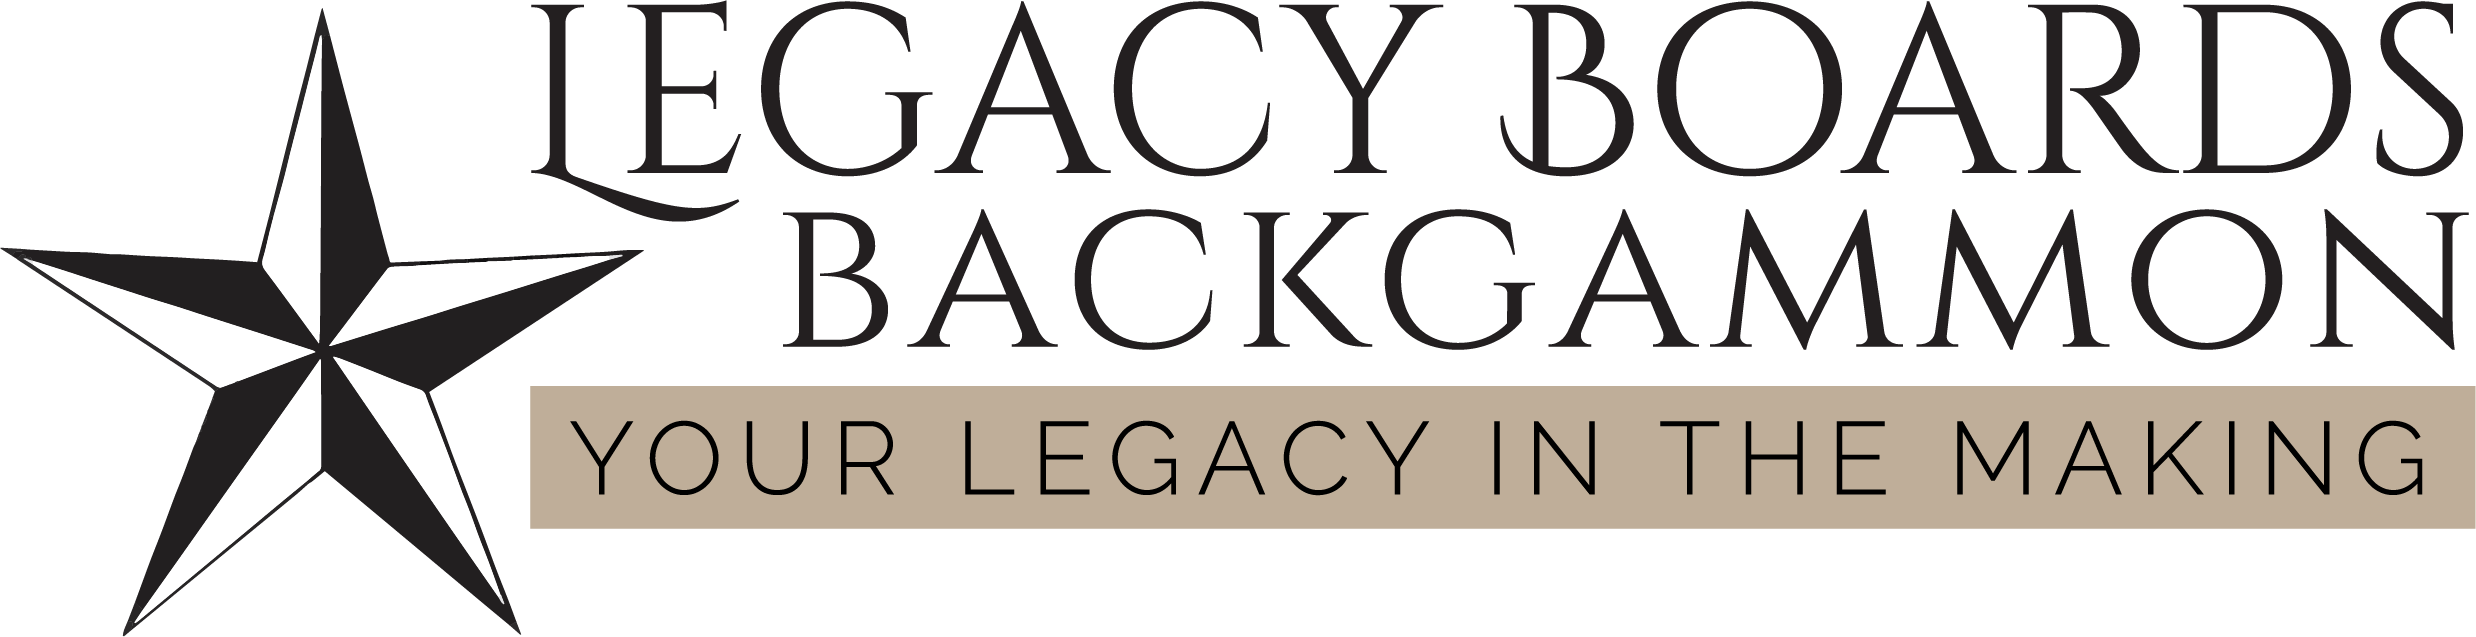 Legacy Boards Backgammon